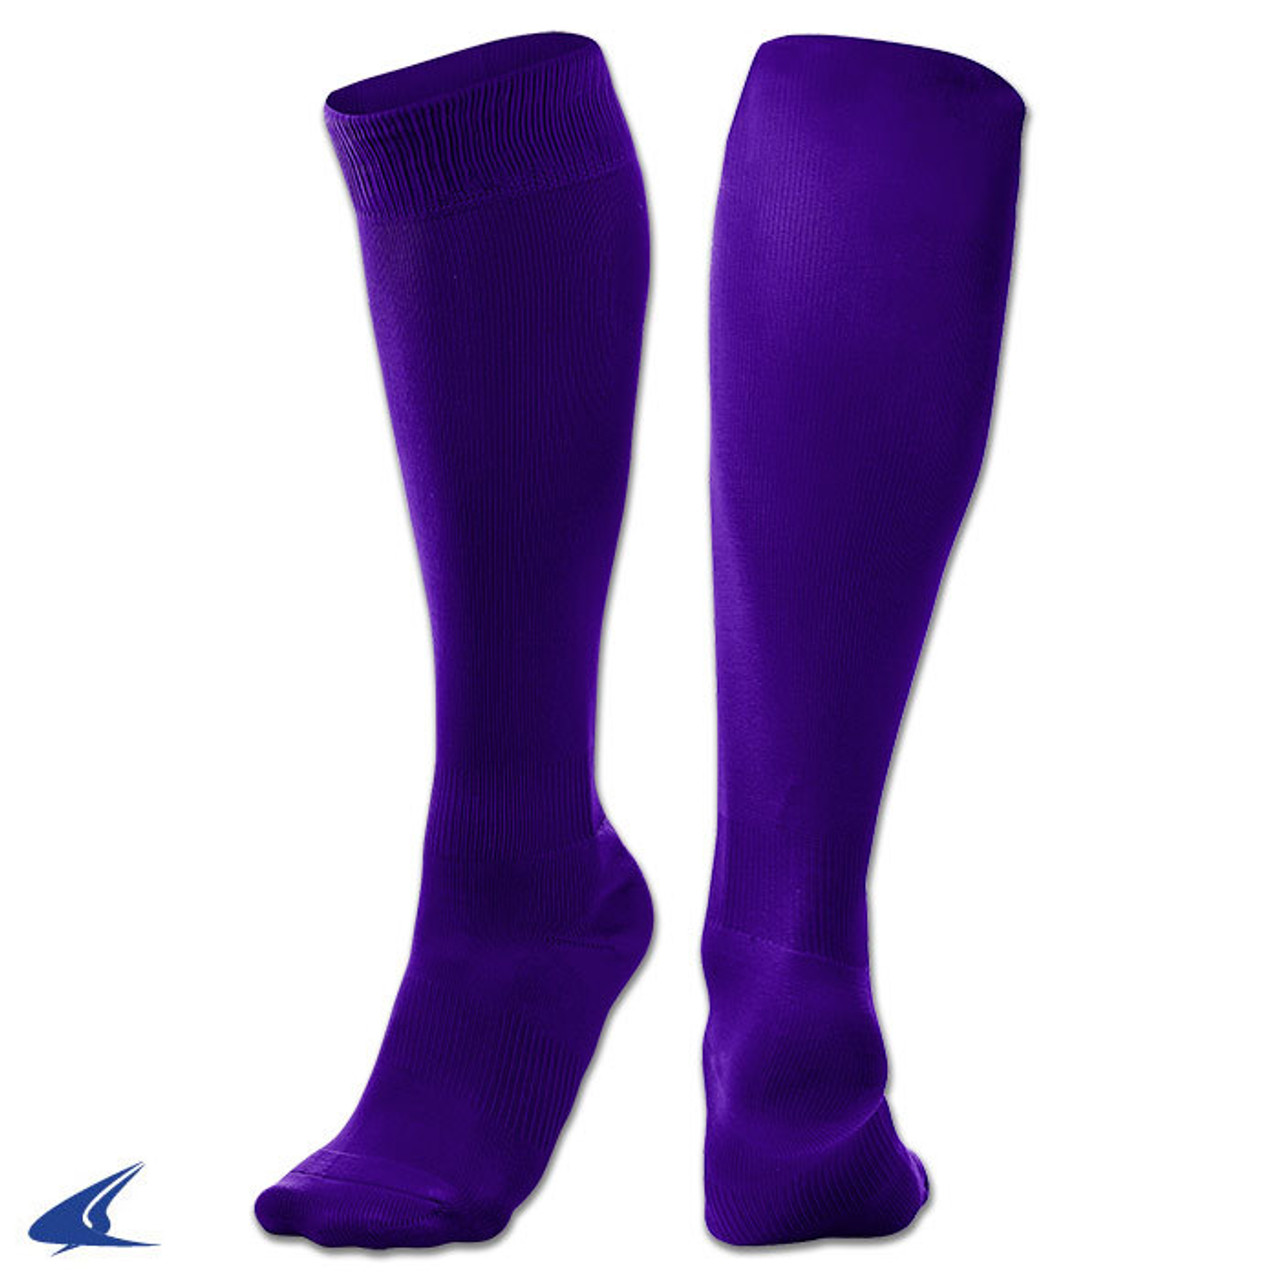 Buy PROBEROS® Hi-Tech Performance Athletic Socks for Men Women